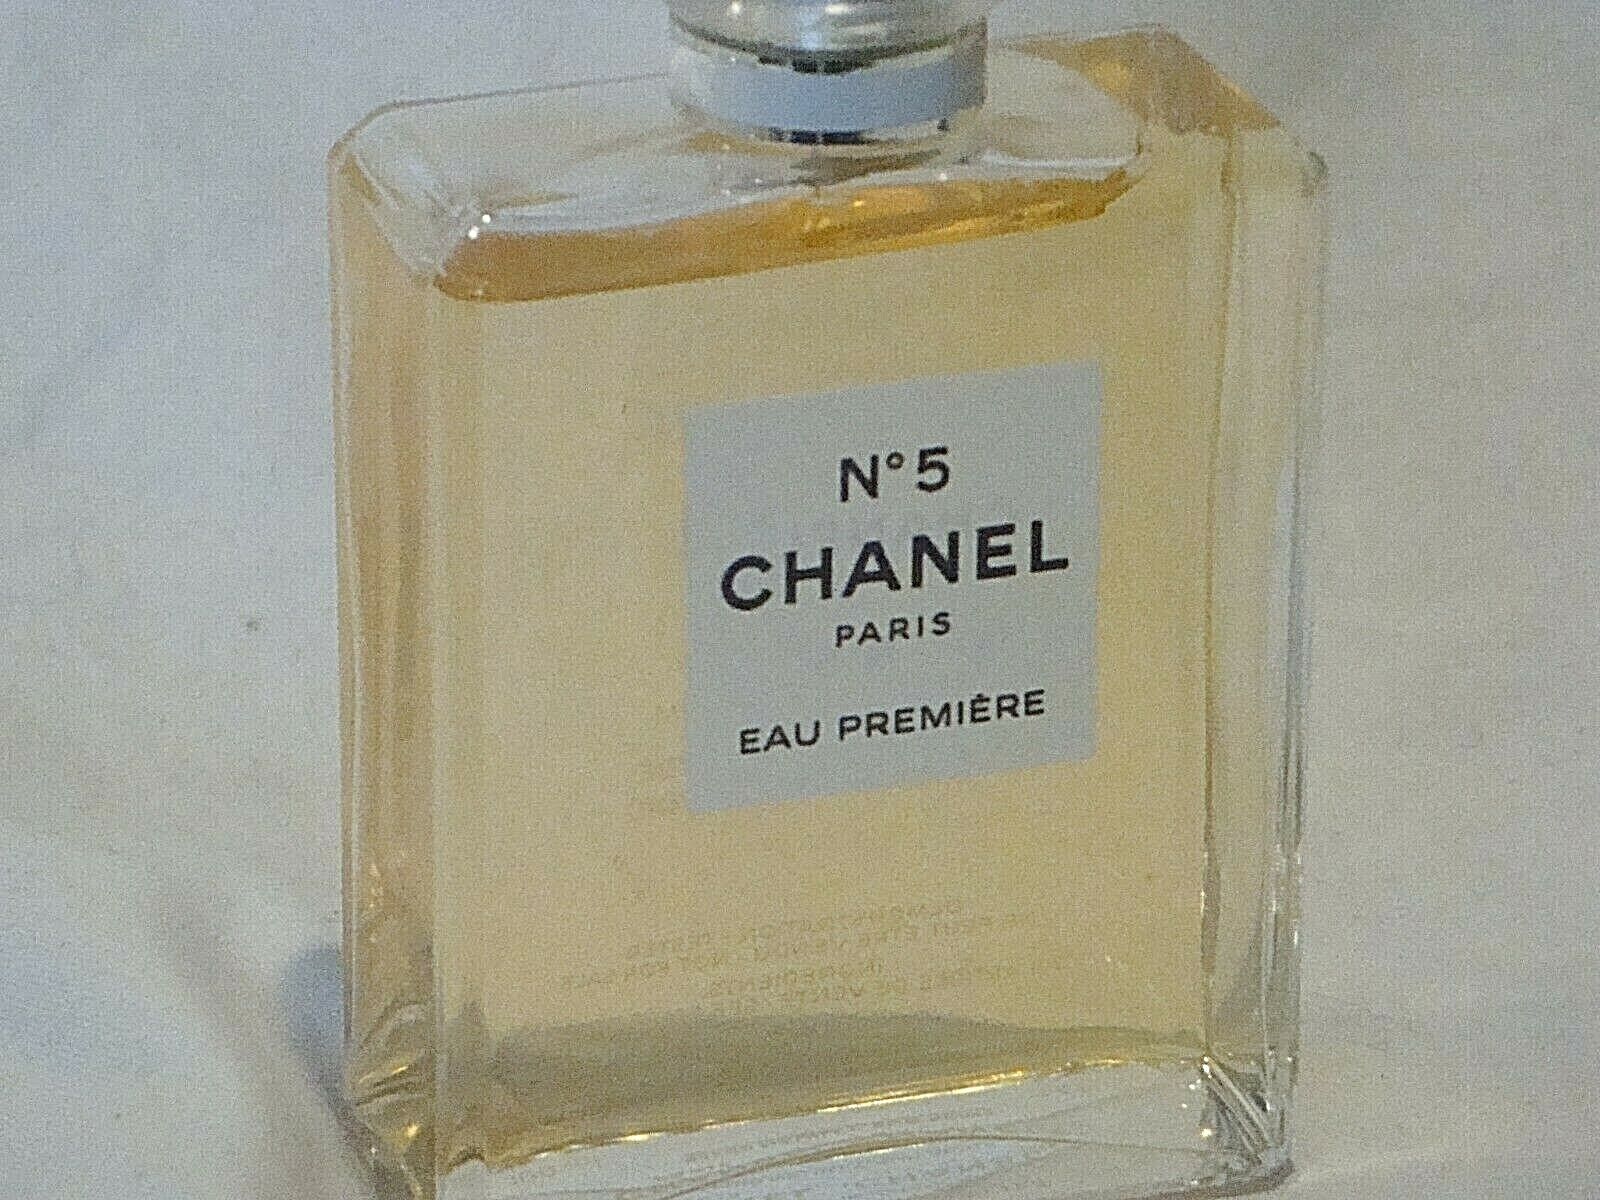 Chanel No 5 Eau Premiere EDP for Women 100ml at Ratans Online Shop - Perfumes Wholesale and Retailer Fragrance